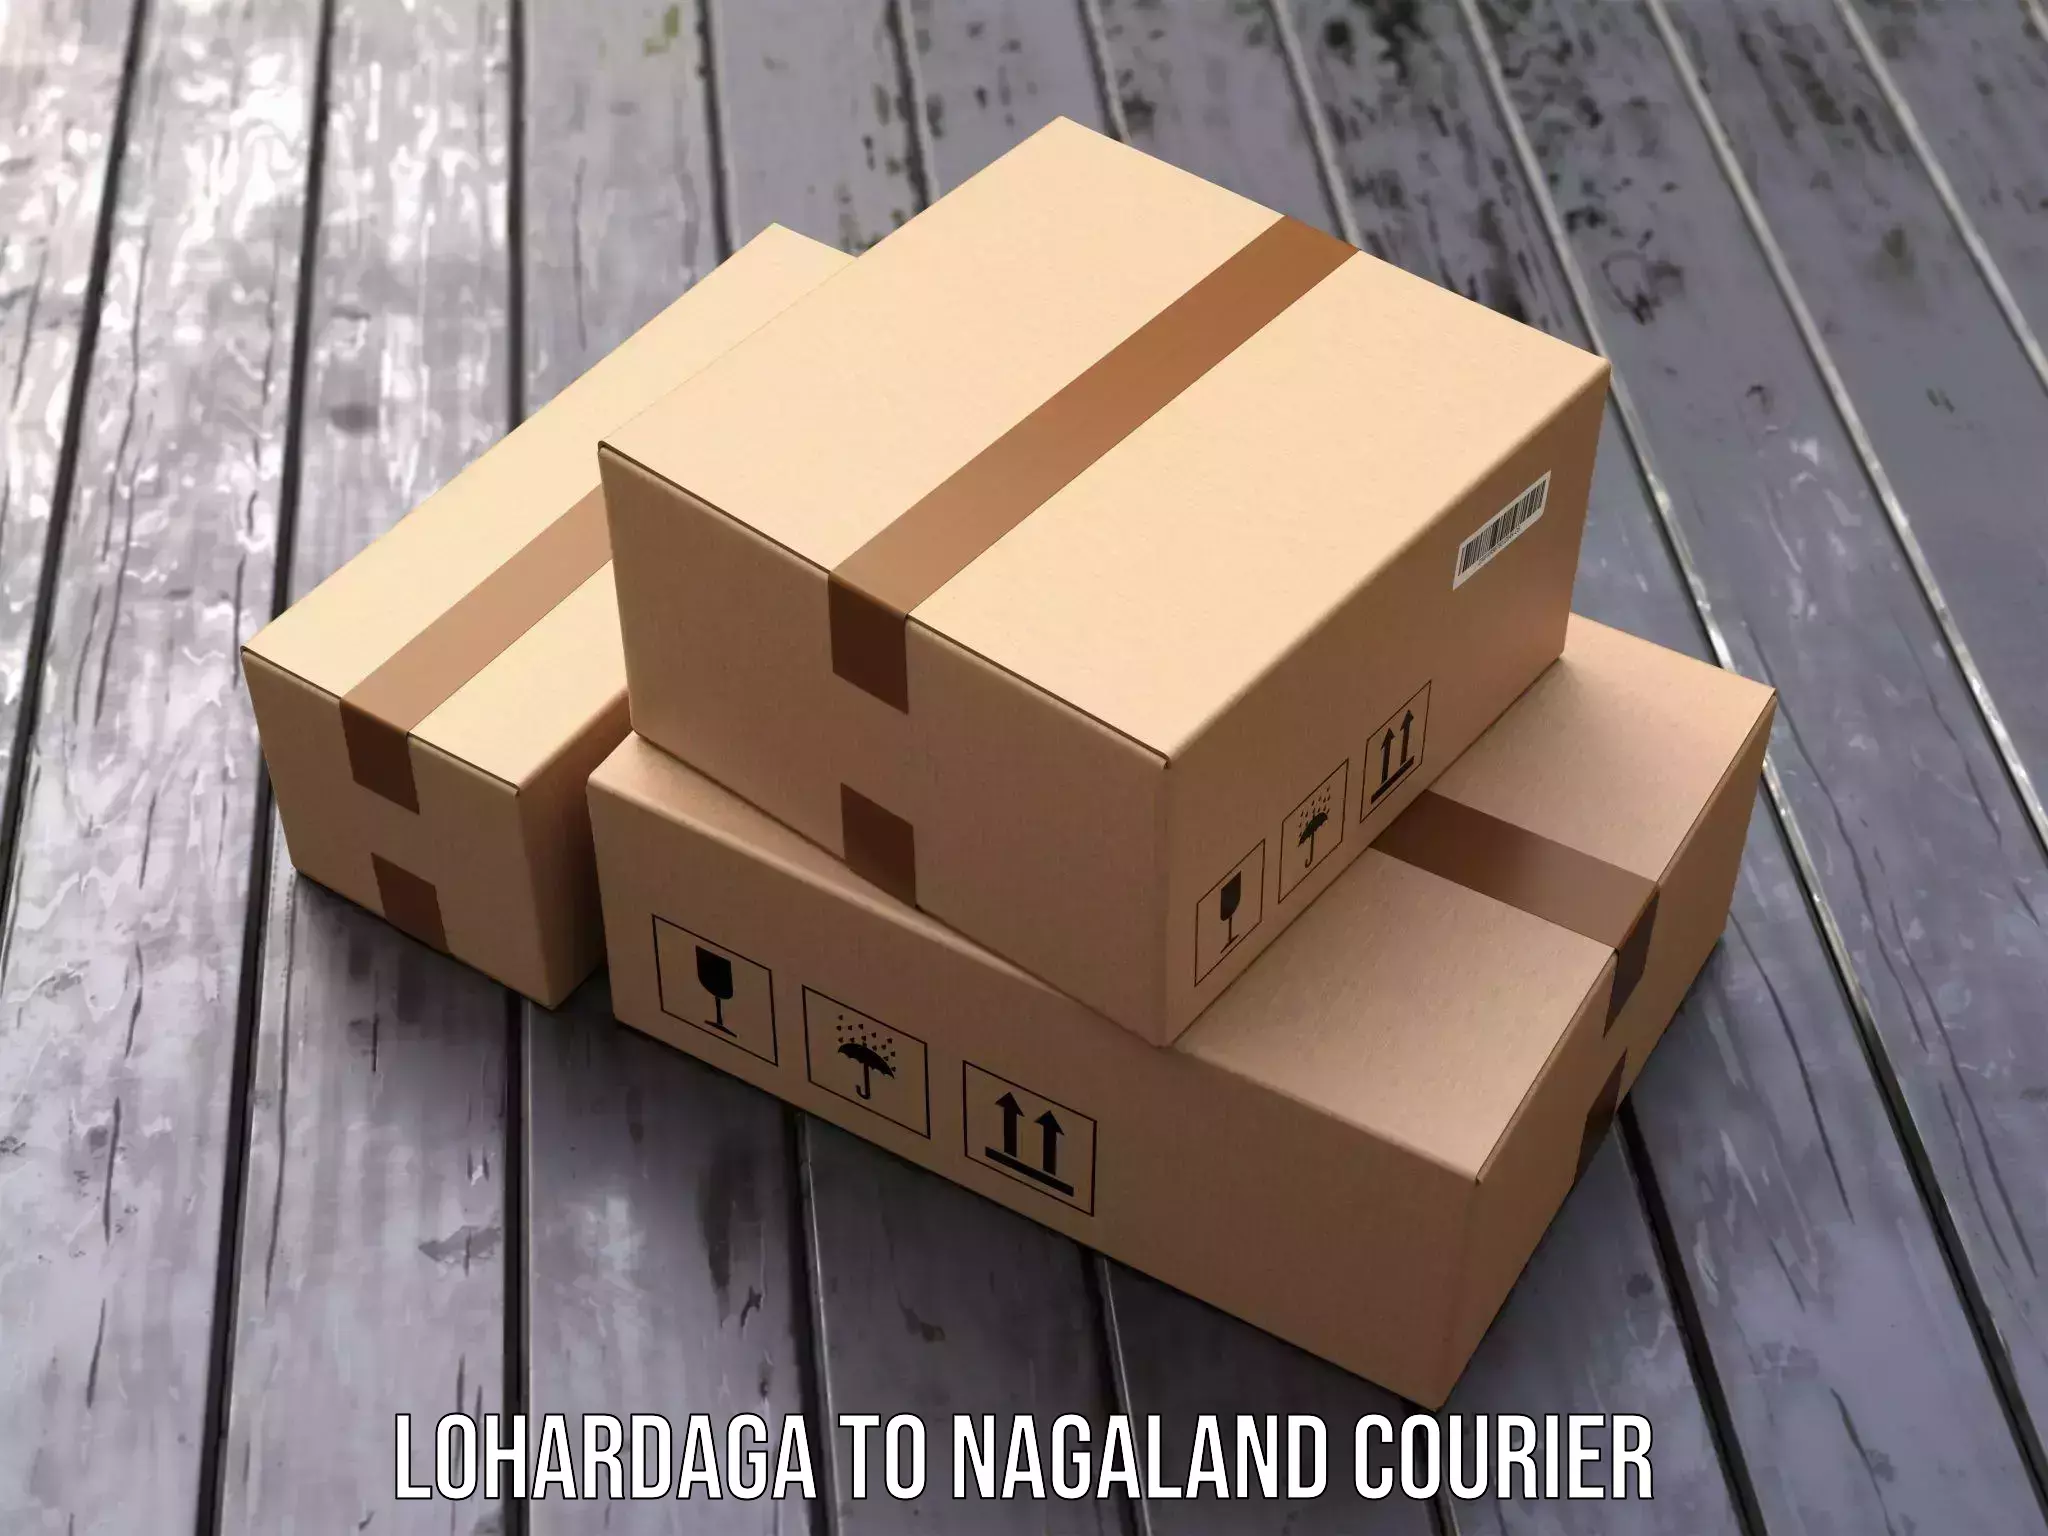 Courier service innovation Lohardaga to Dimapur